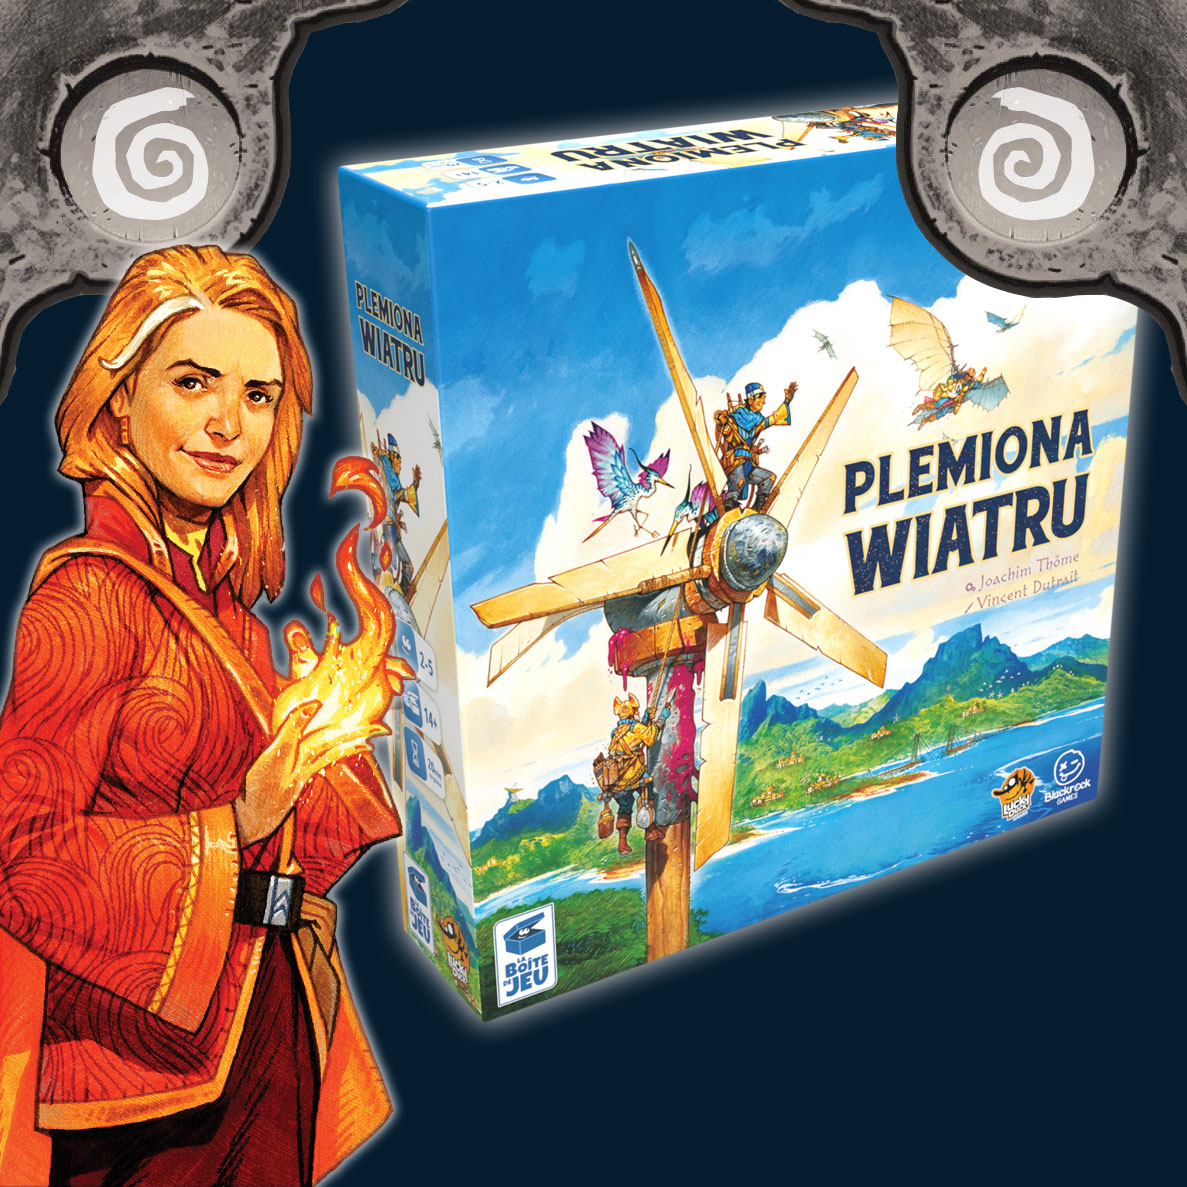 Plemiona Wiatru - pudełko